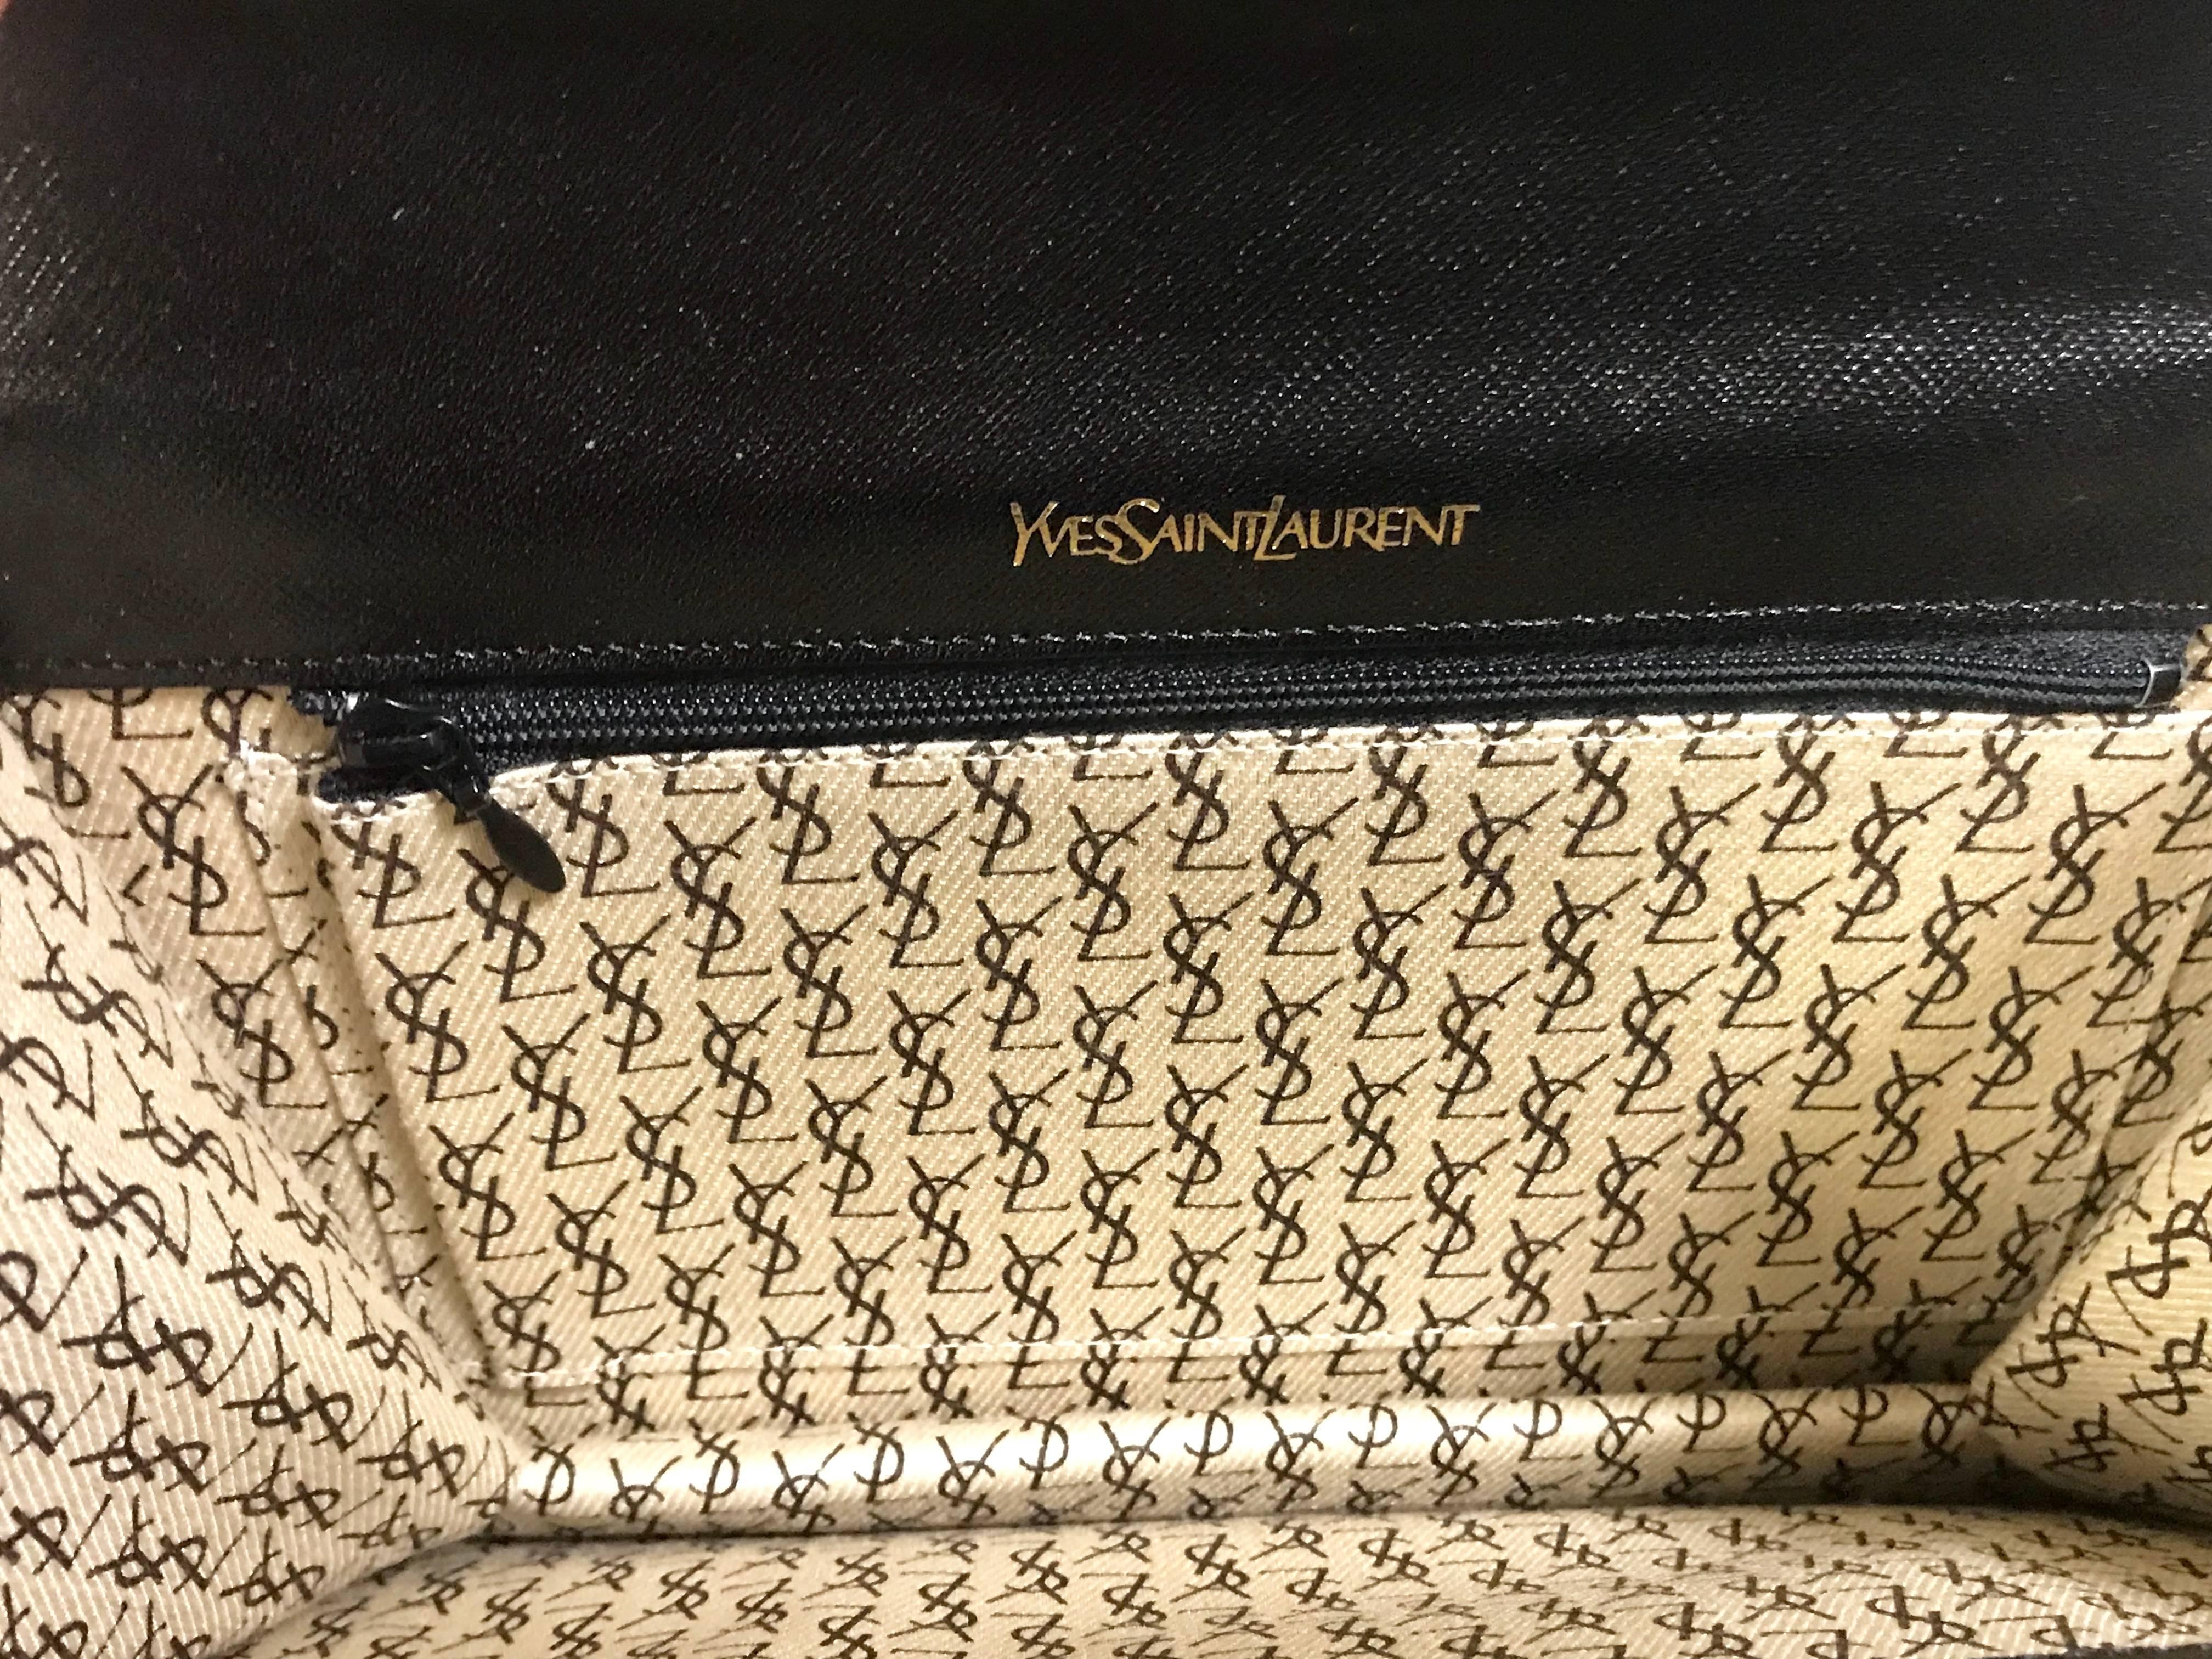 Vintage Yves Saint Laurent genuine black leather clutch purse with beak tip flap 2